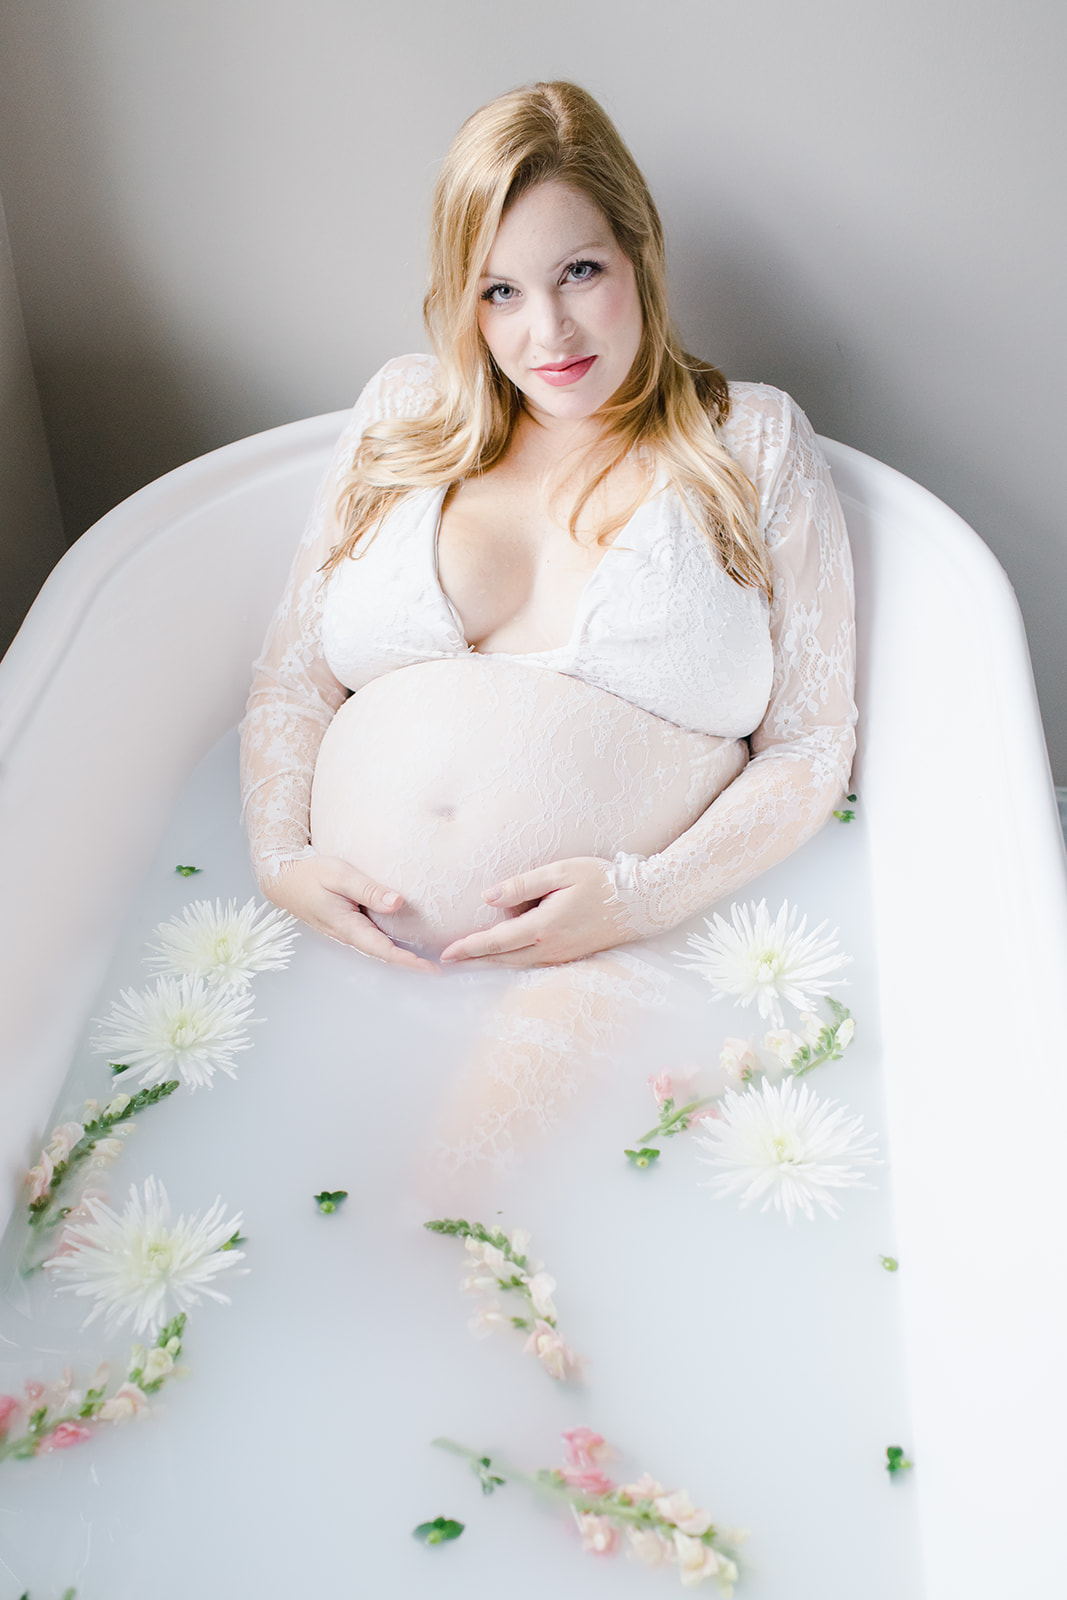 Milk bath maternity session